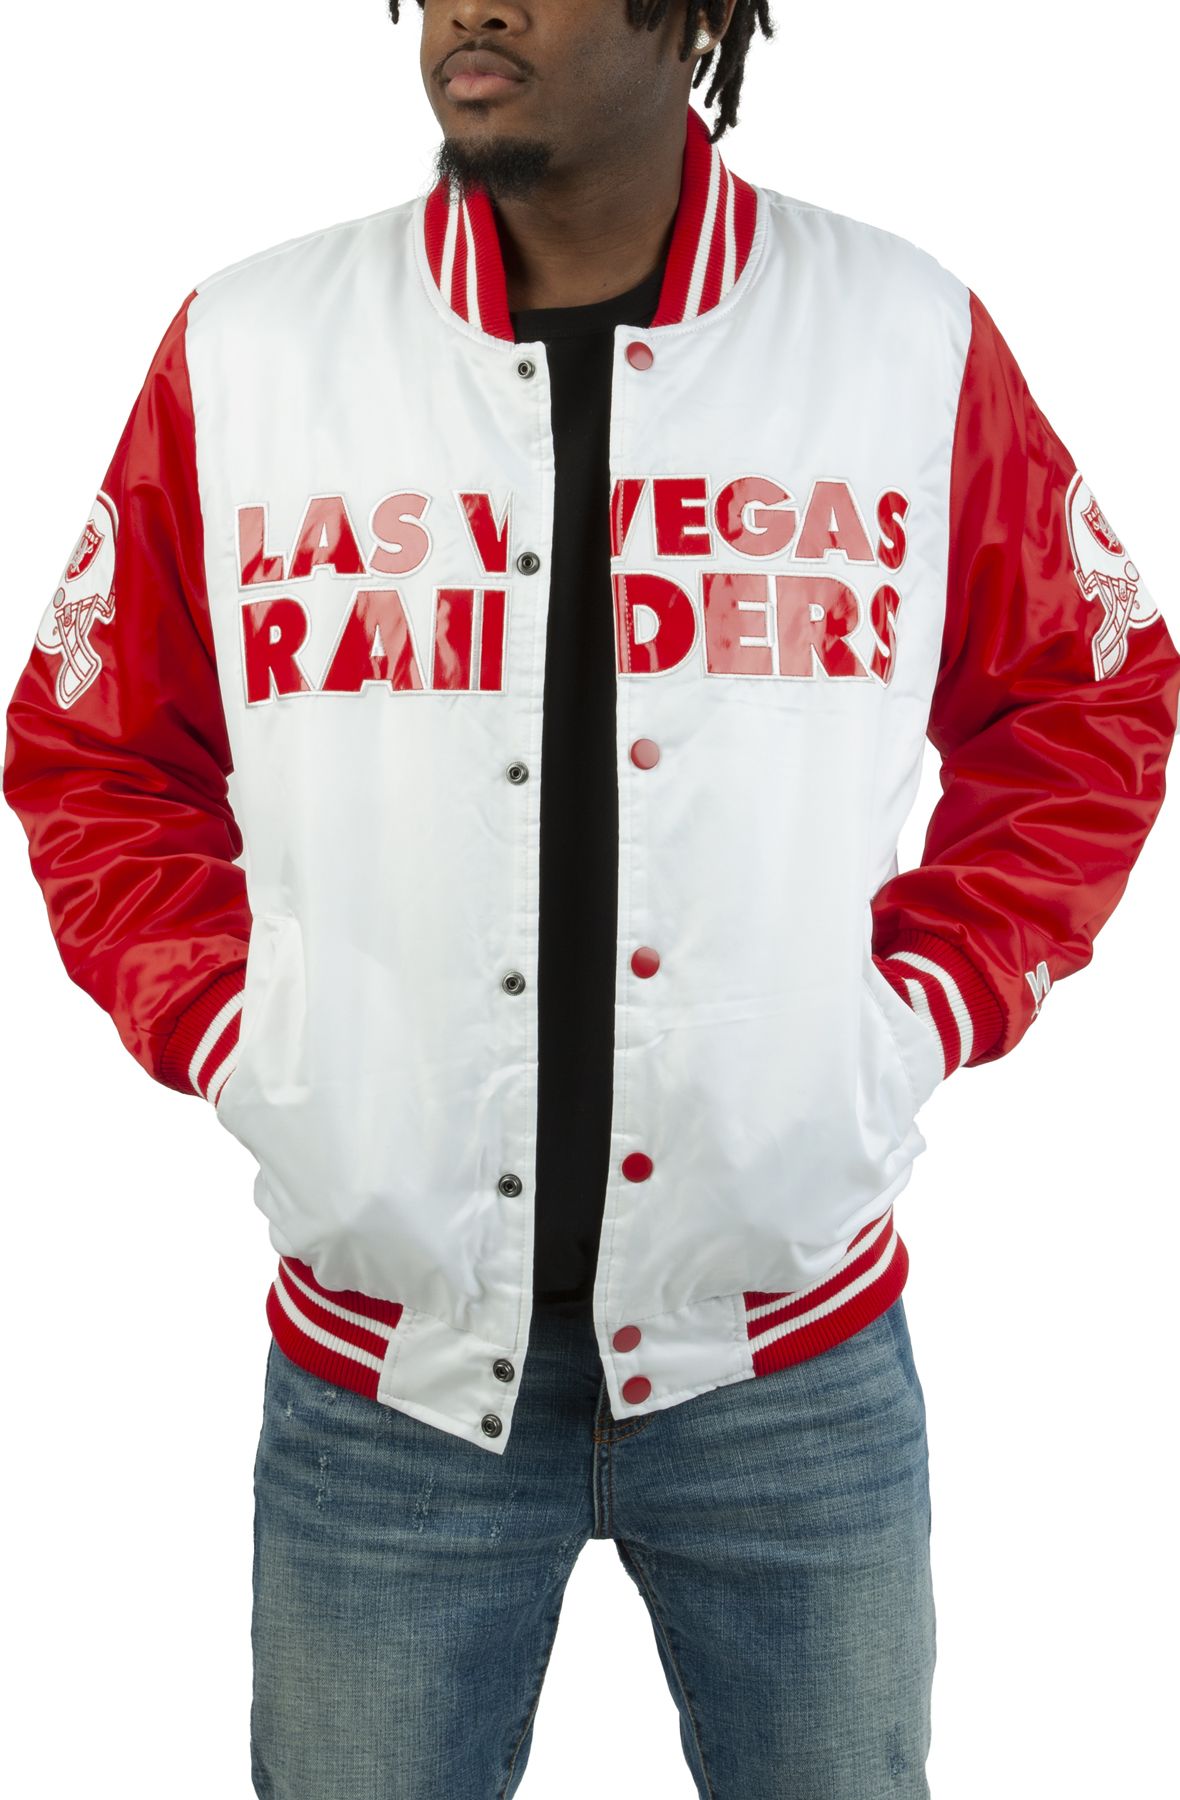 Las Vegas Raiders Letterman White and Black Jacket